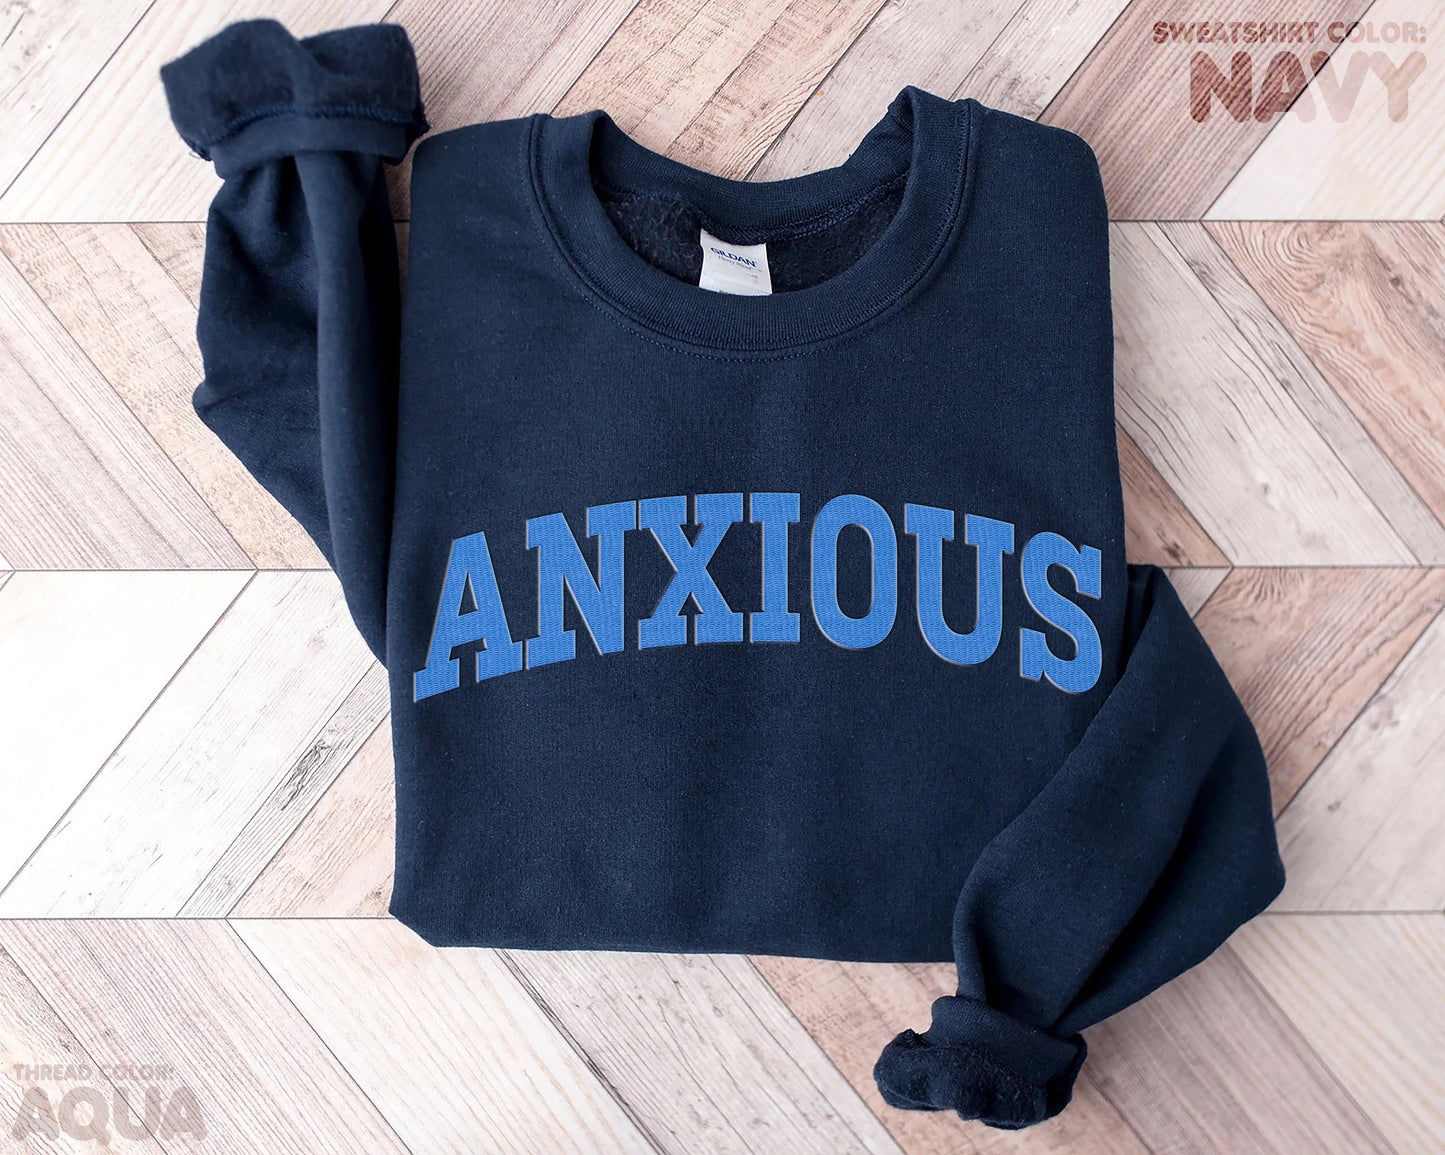 Anxious Embroidered Sweatshirt